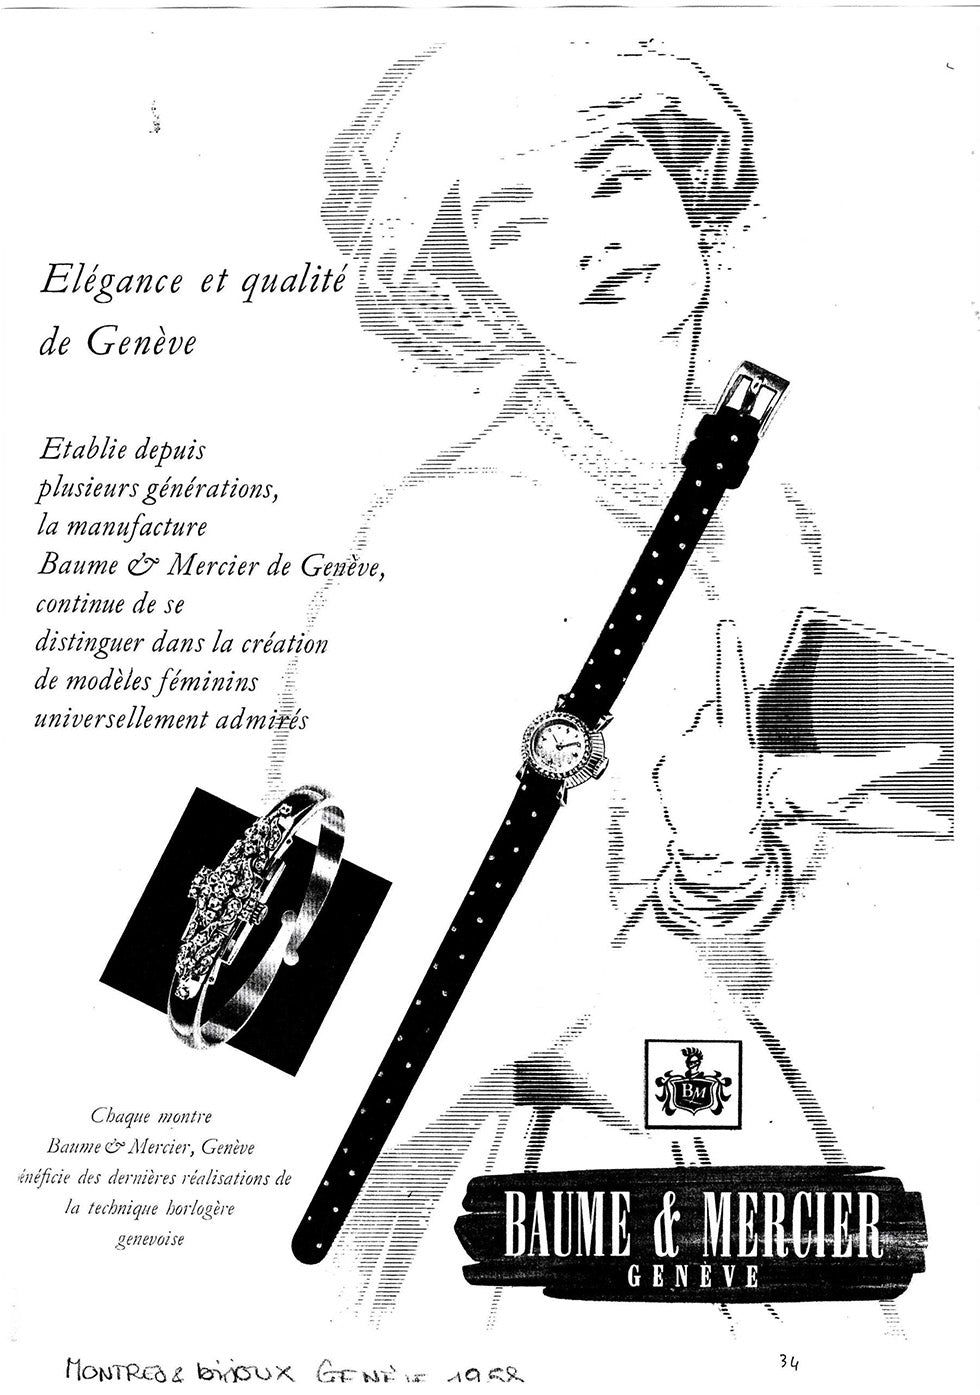 Advertisement for Baume & Mercier women's watches